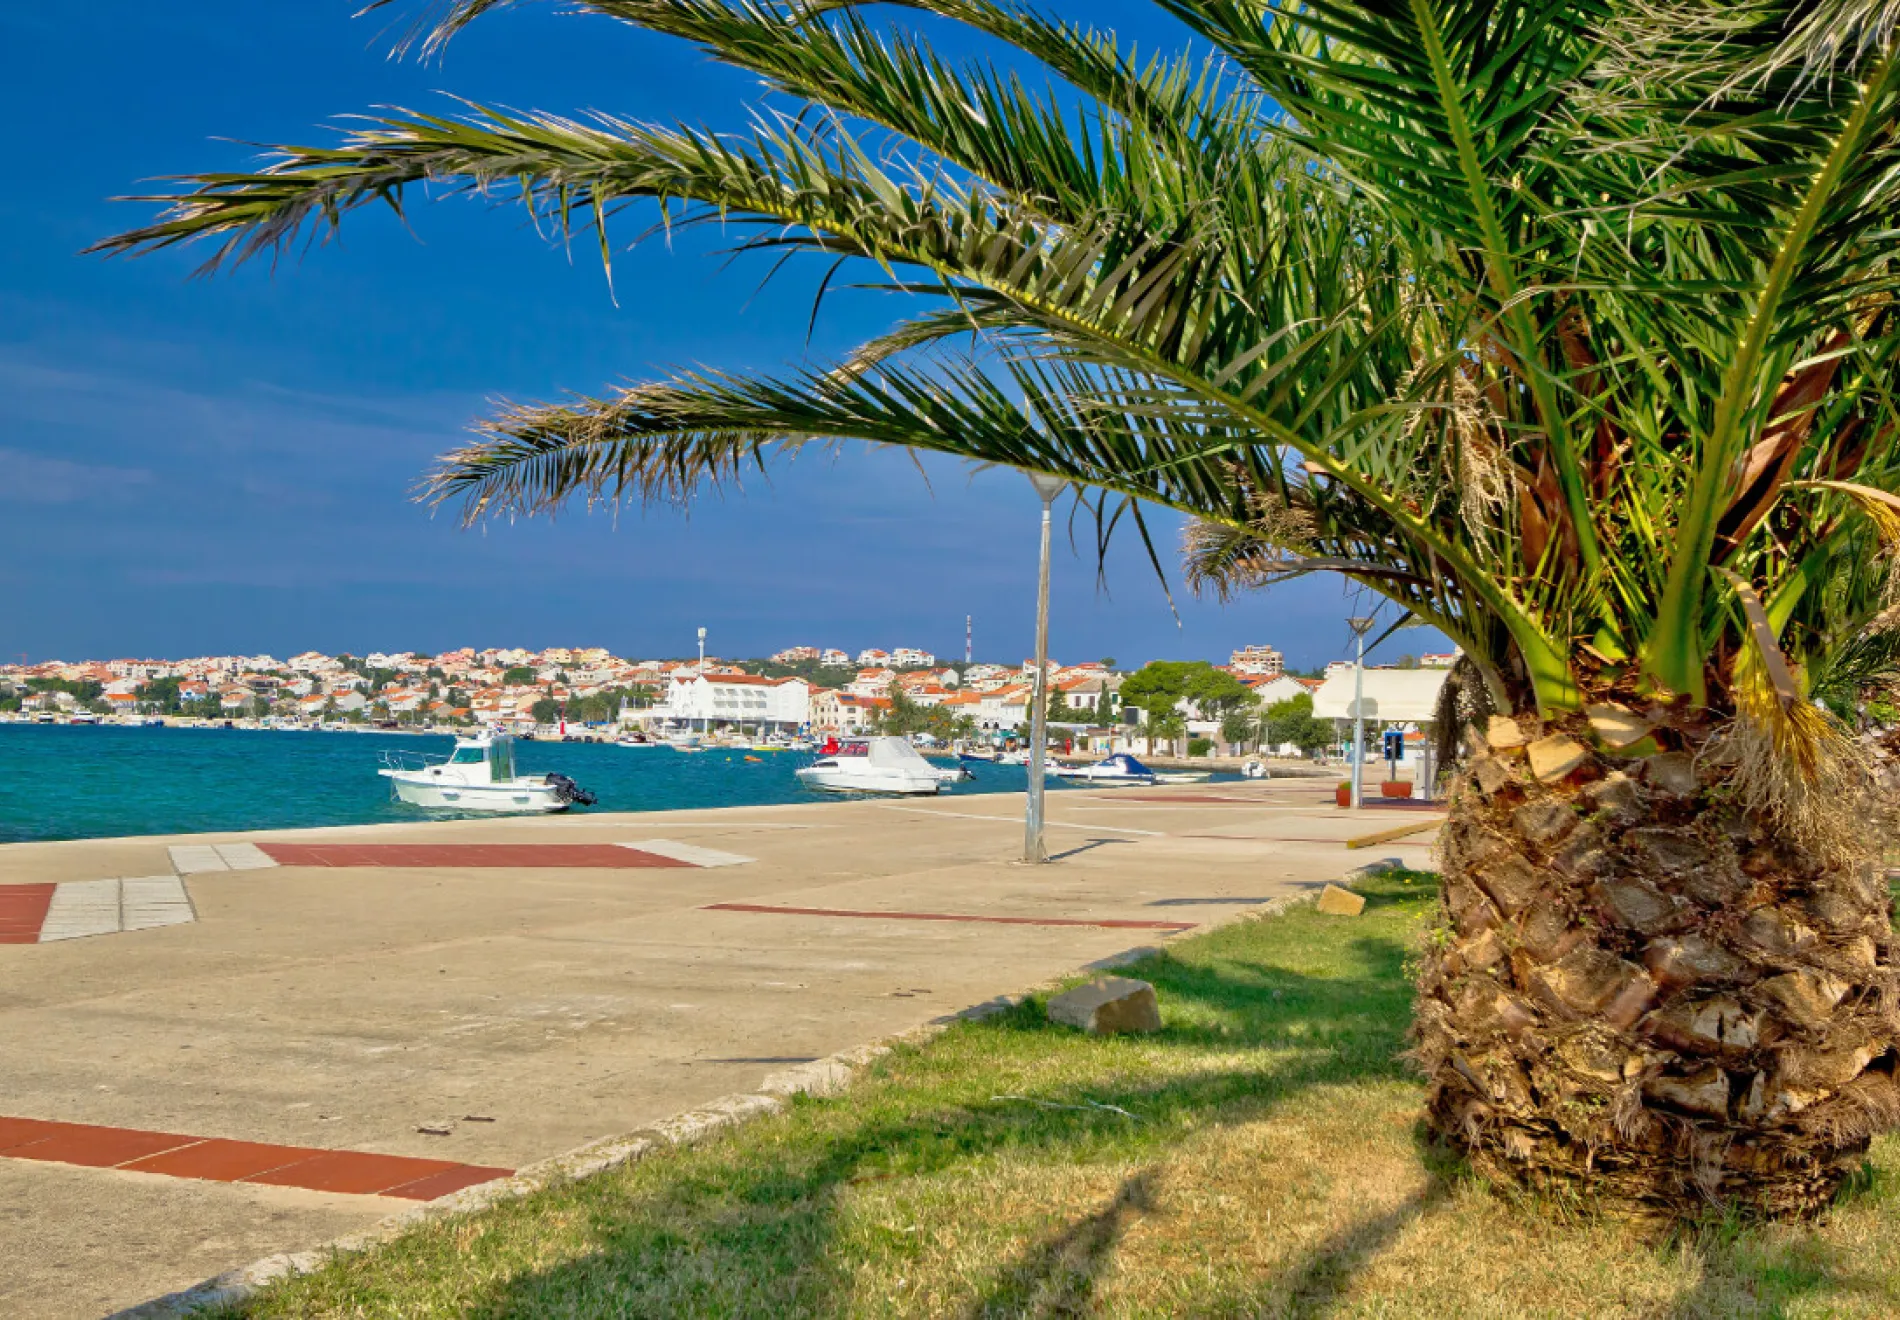 Town of Novalja palm waterfront view island of Pag in Dalmatia Croatia